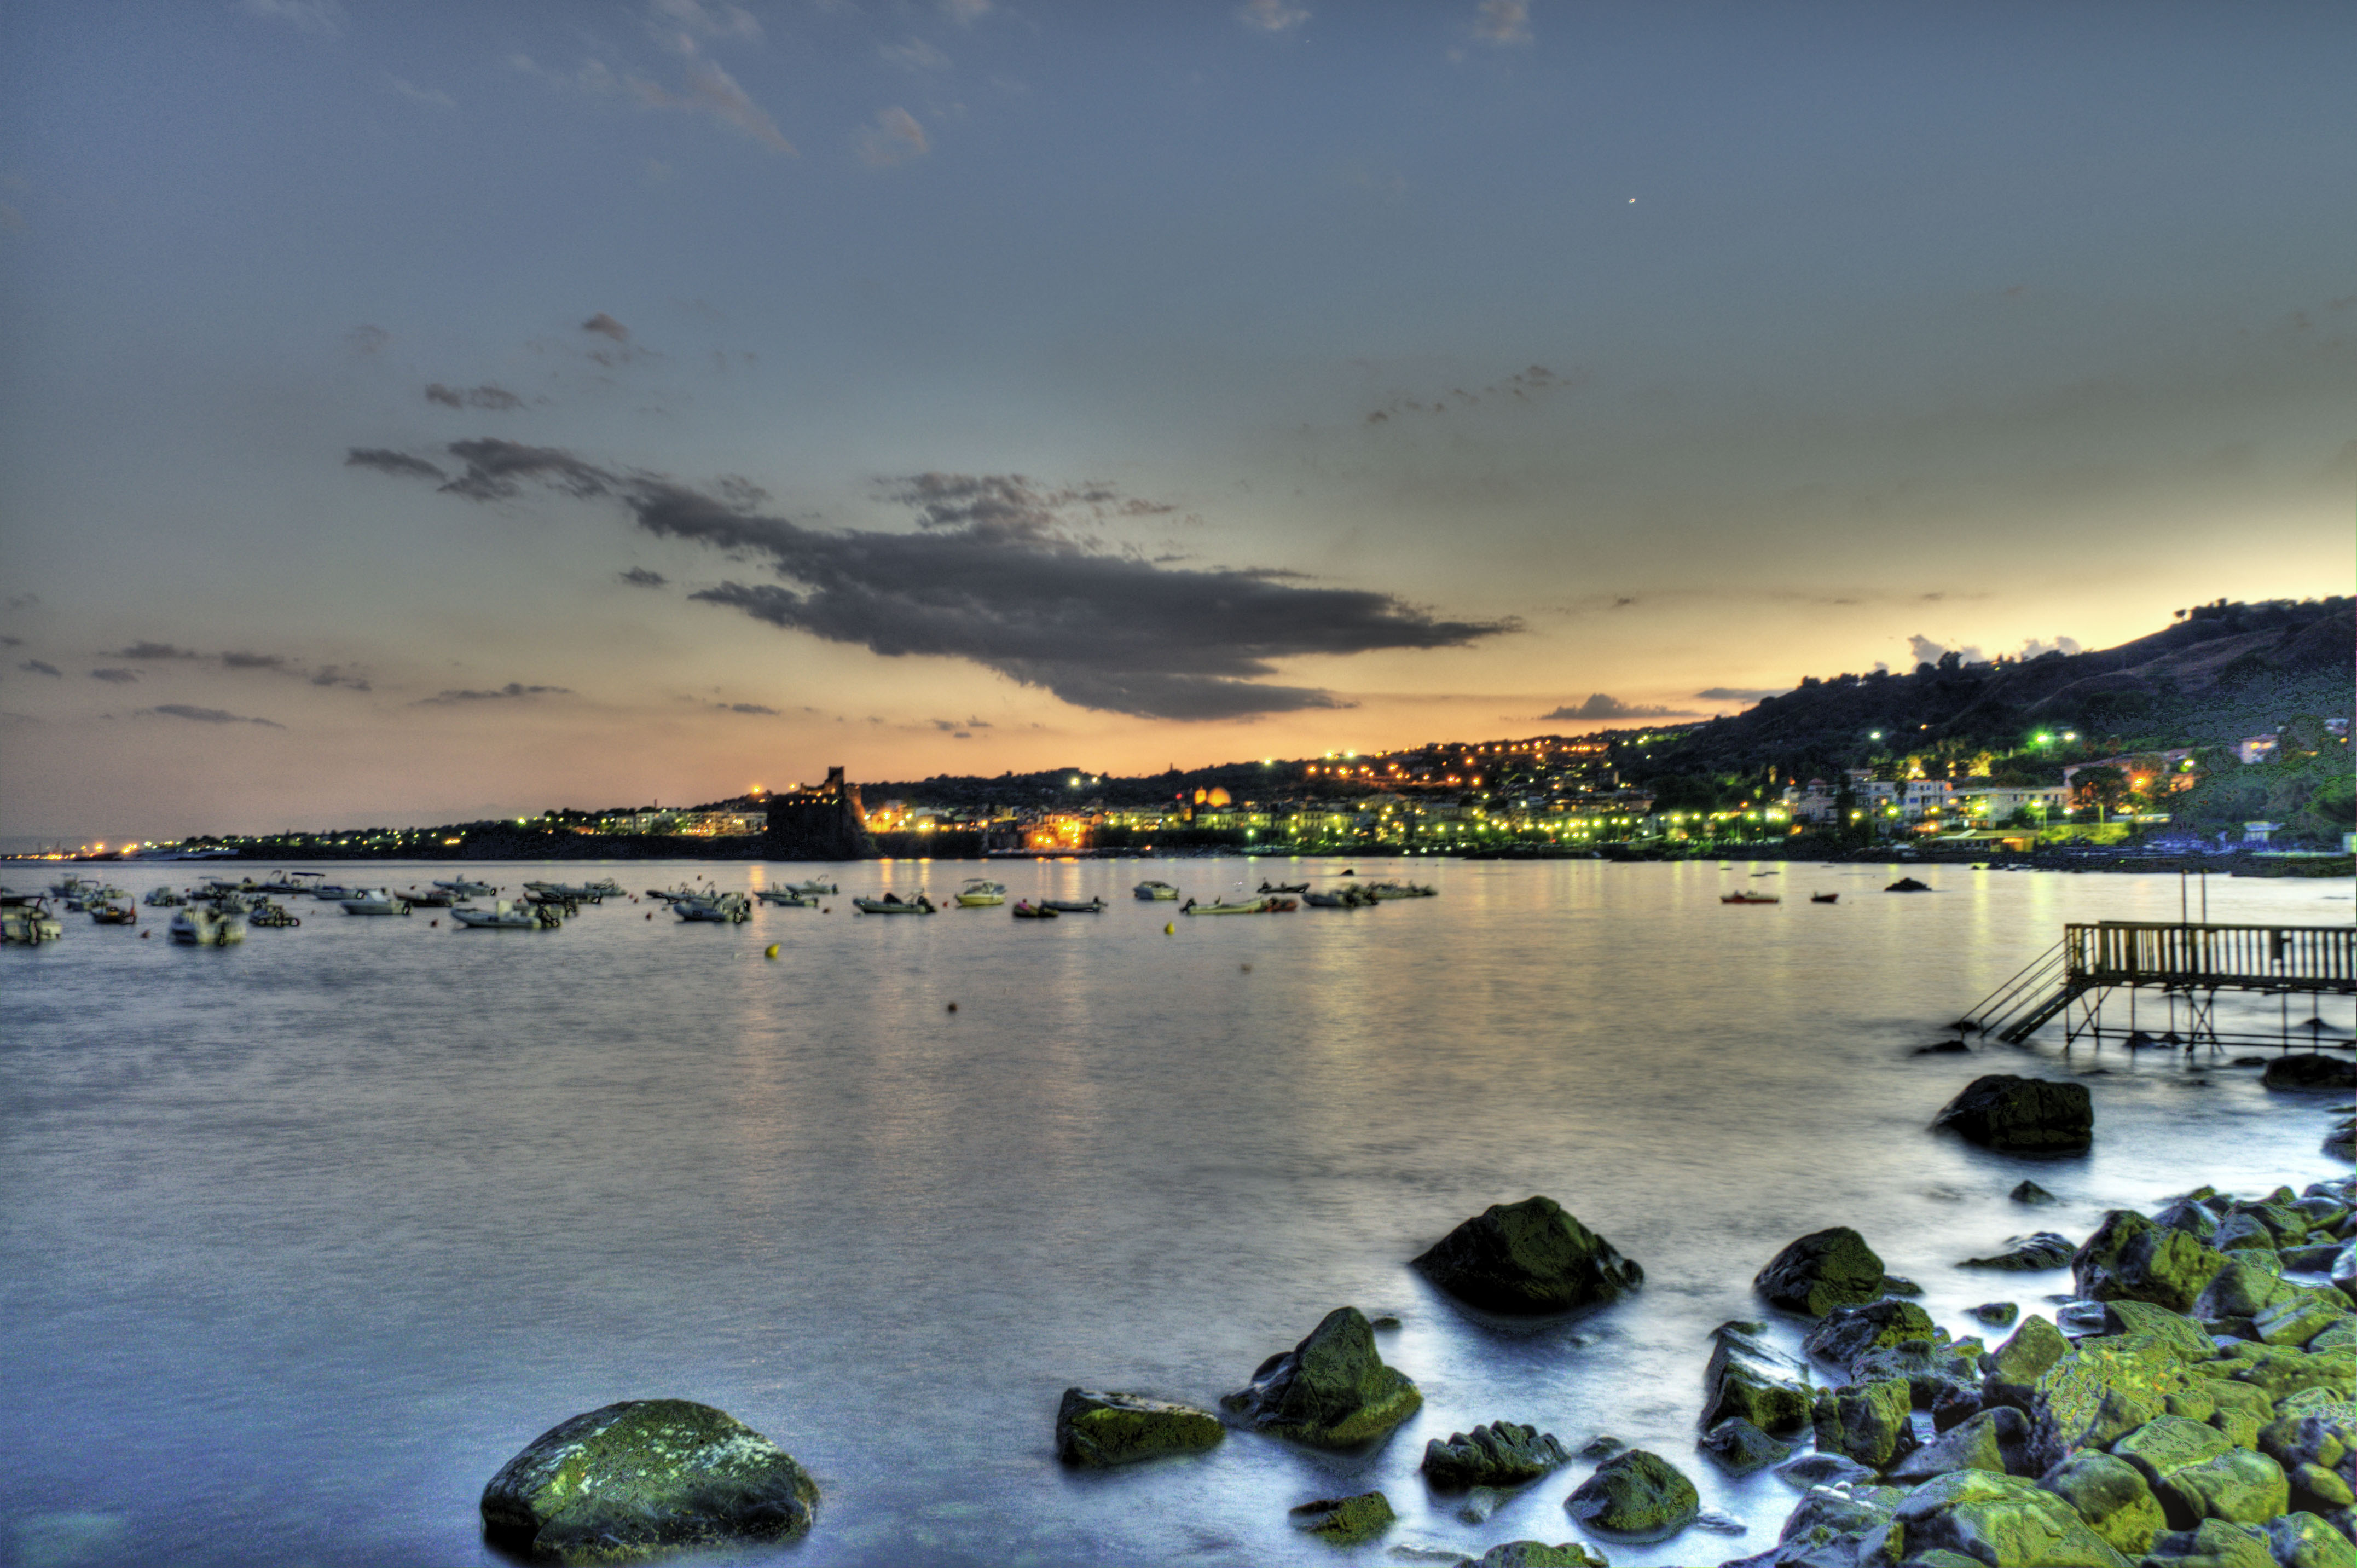 View of aci castello across the sea from acitrezza sicilia italy italia hdr - creative commons by gnuckx photo